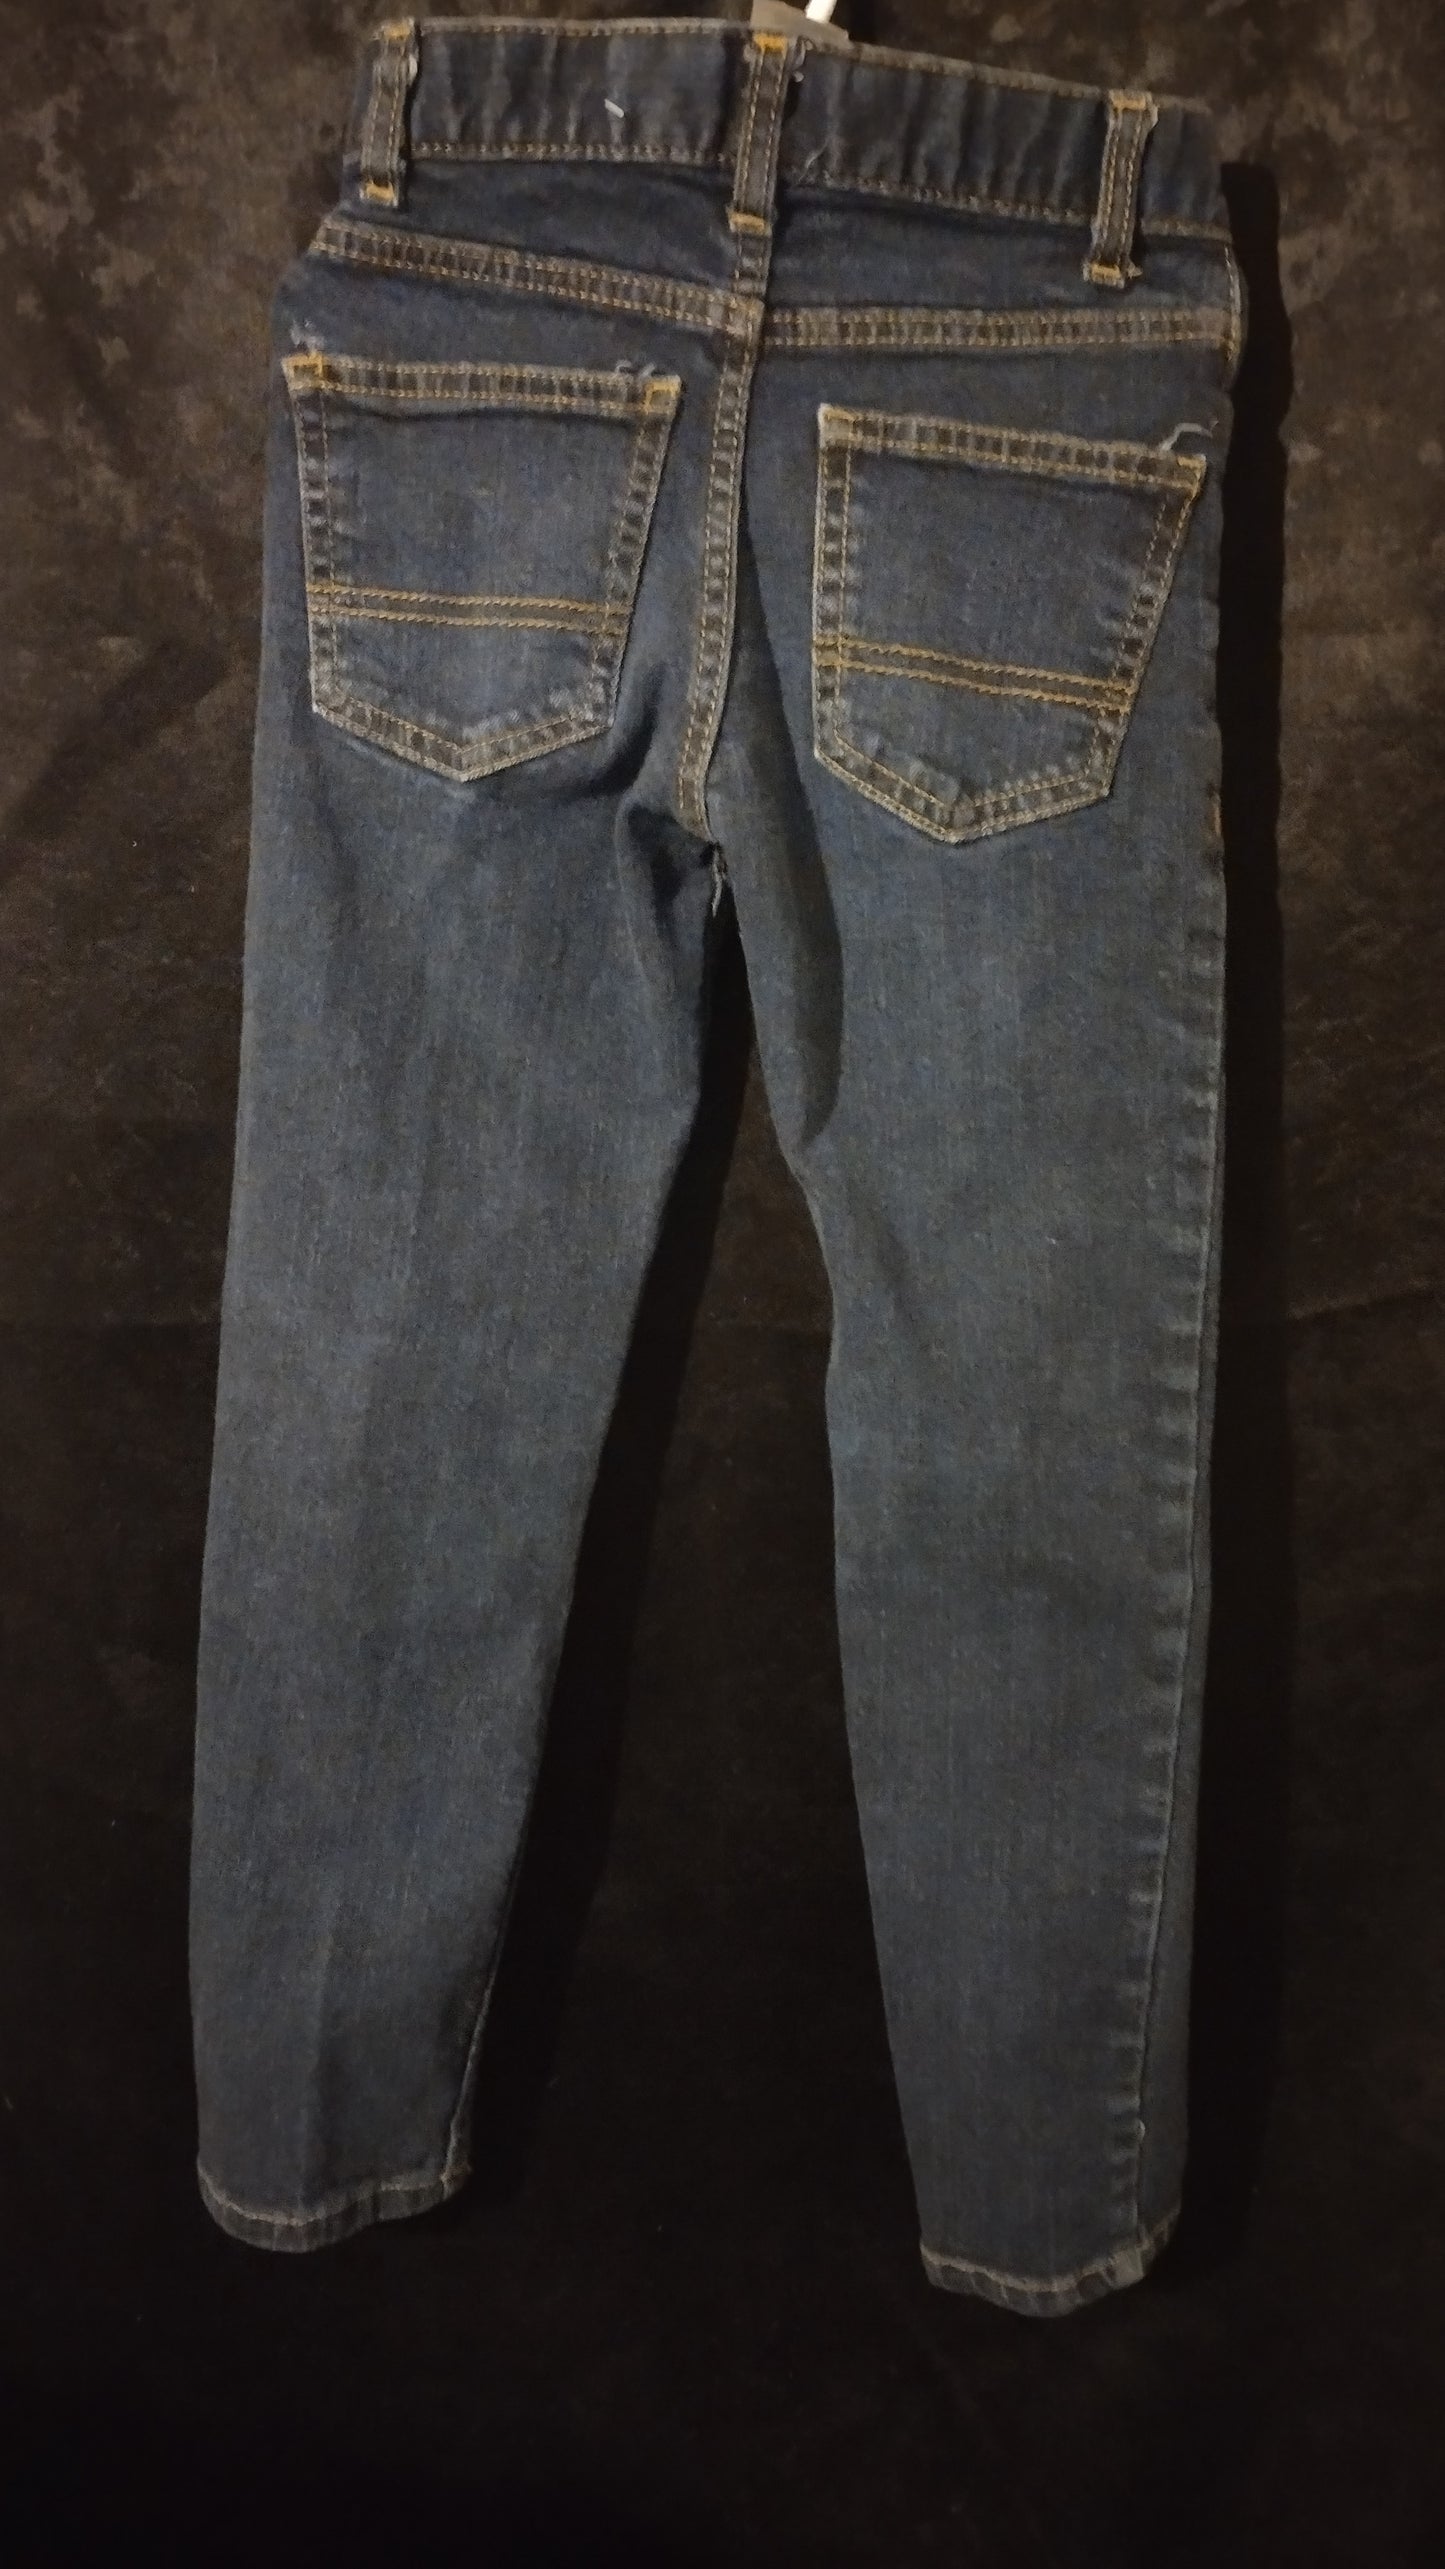 Boys jeans size 8